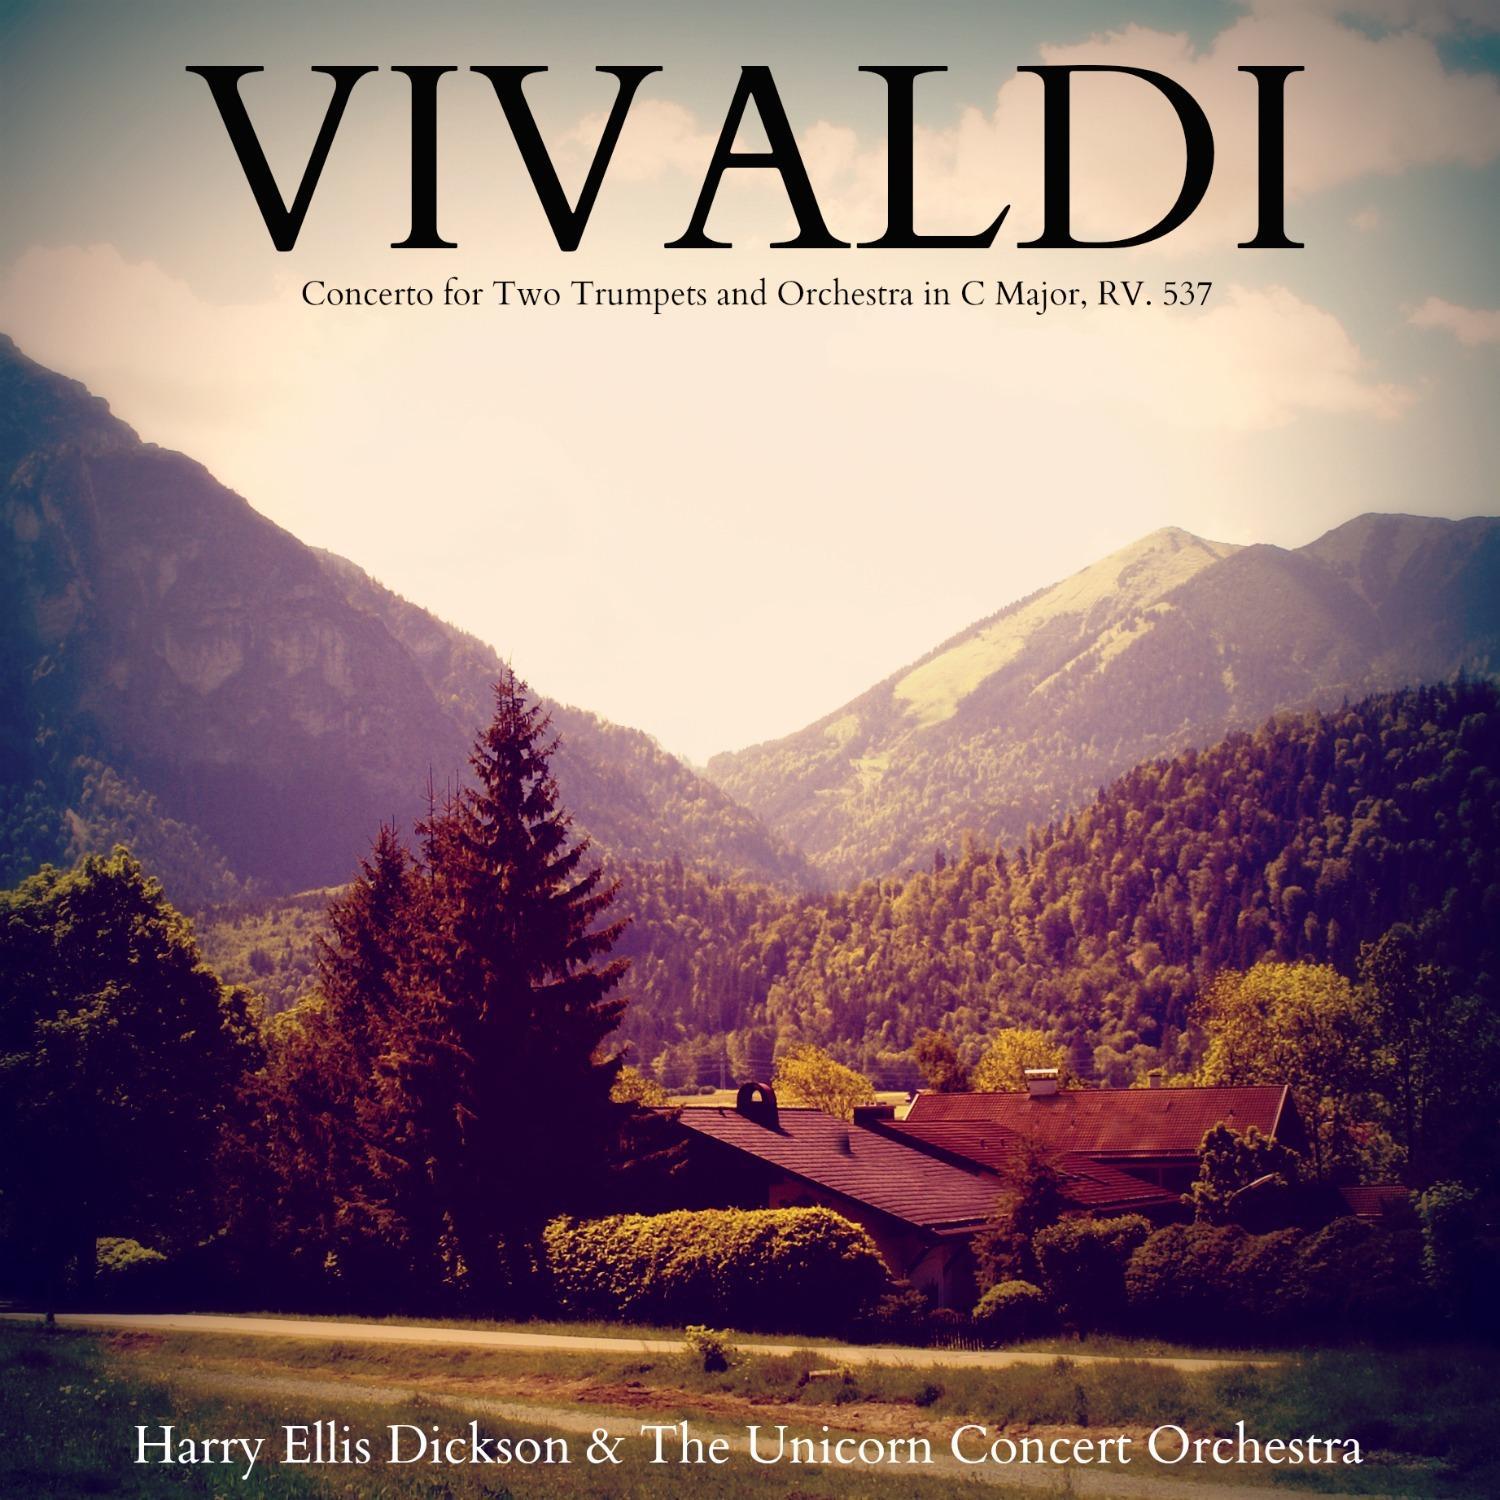 Vivaldi: Concerto for Two Trumpets and Orchestra in C Major, RV. 537